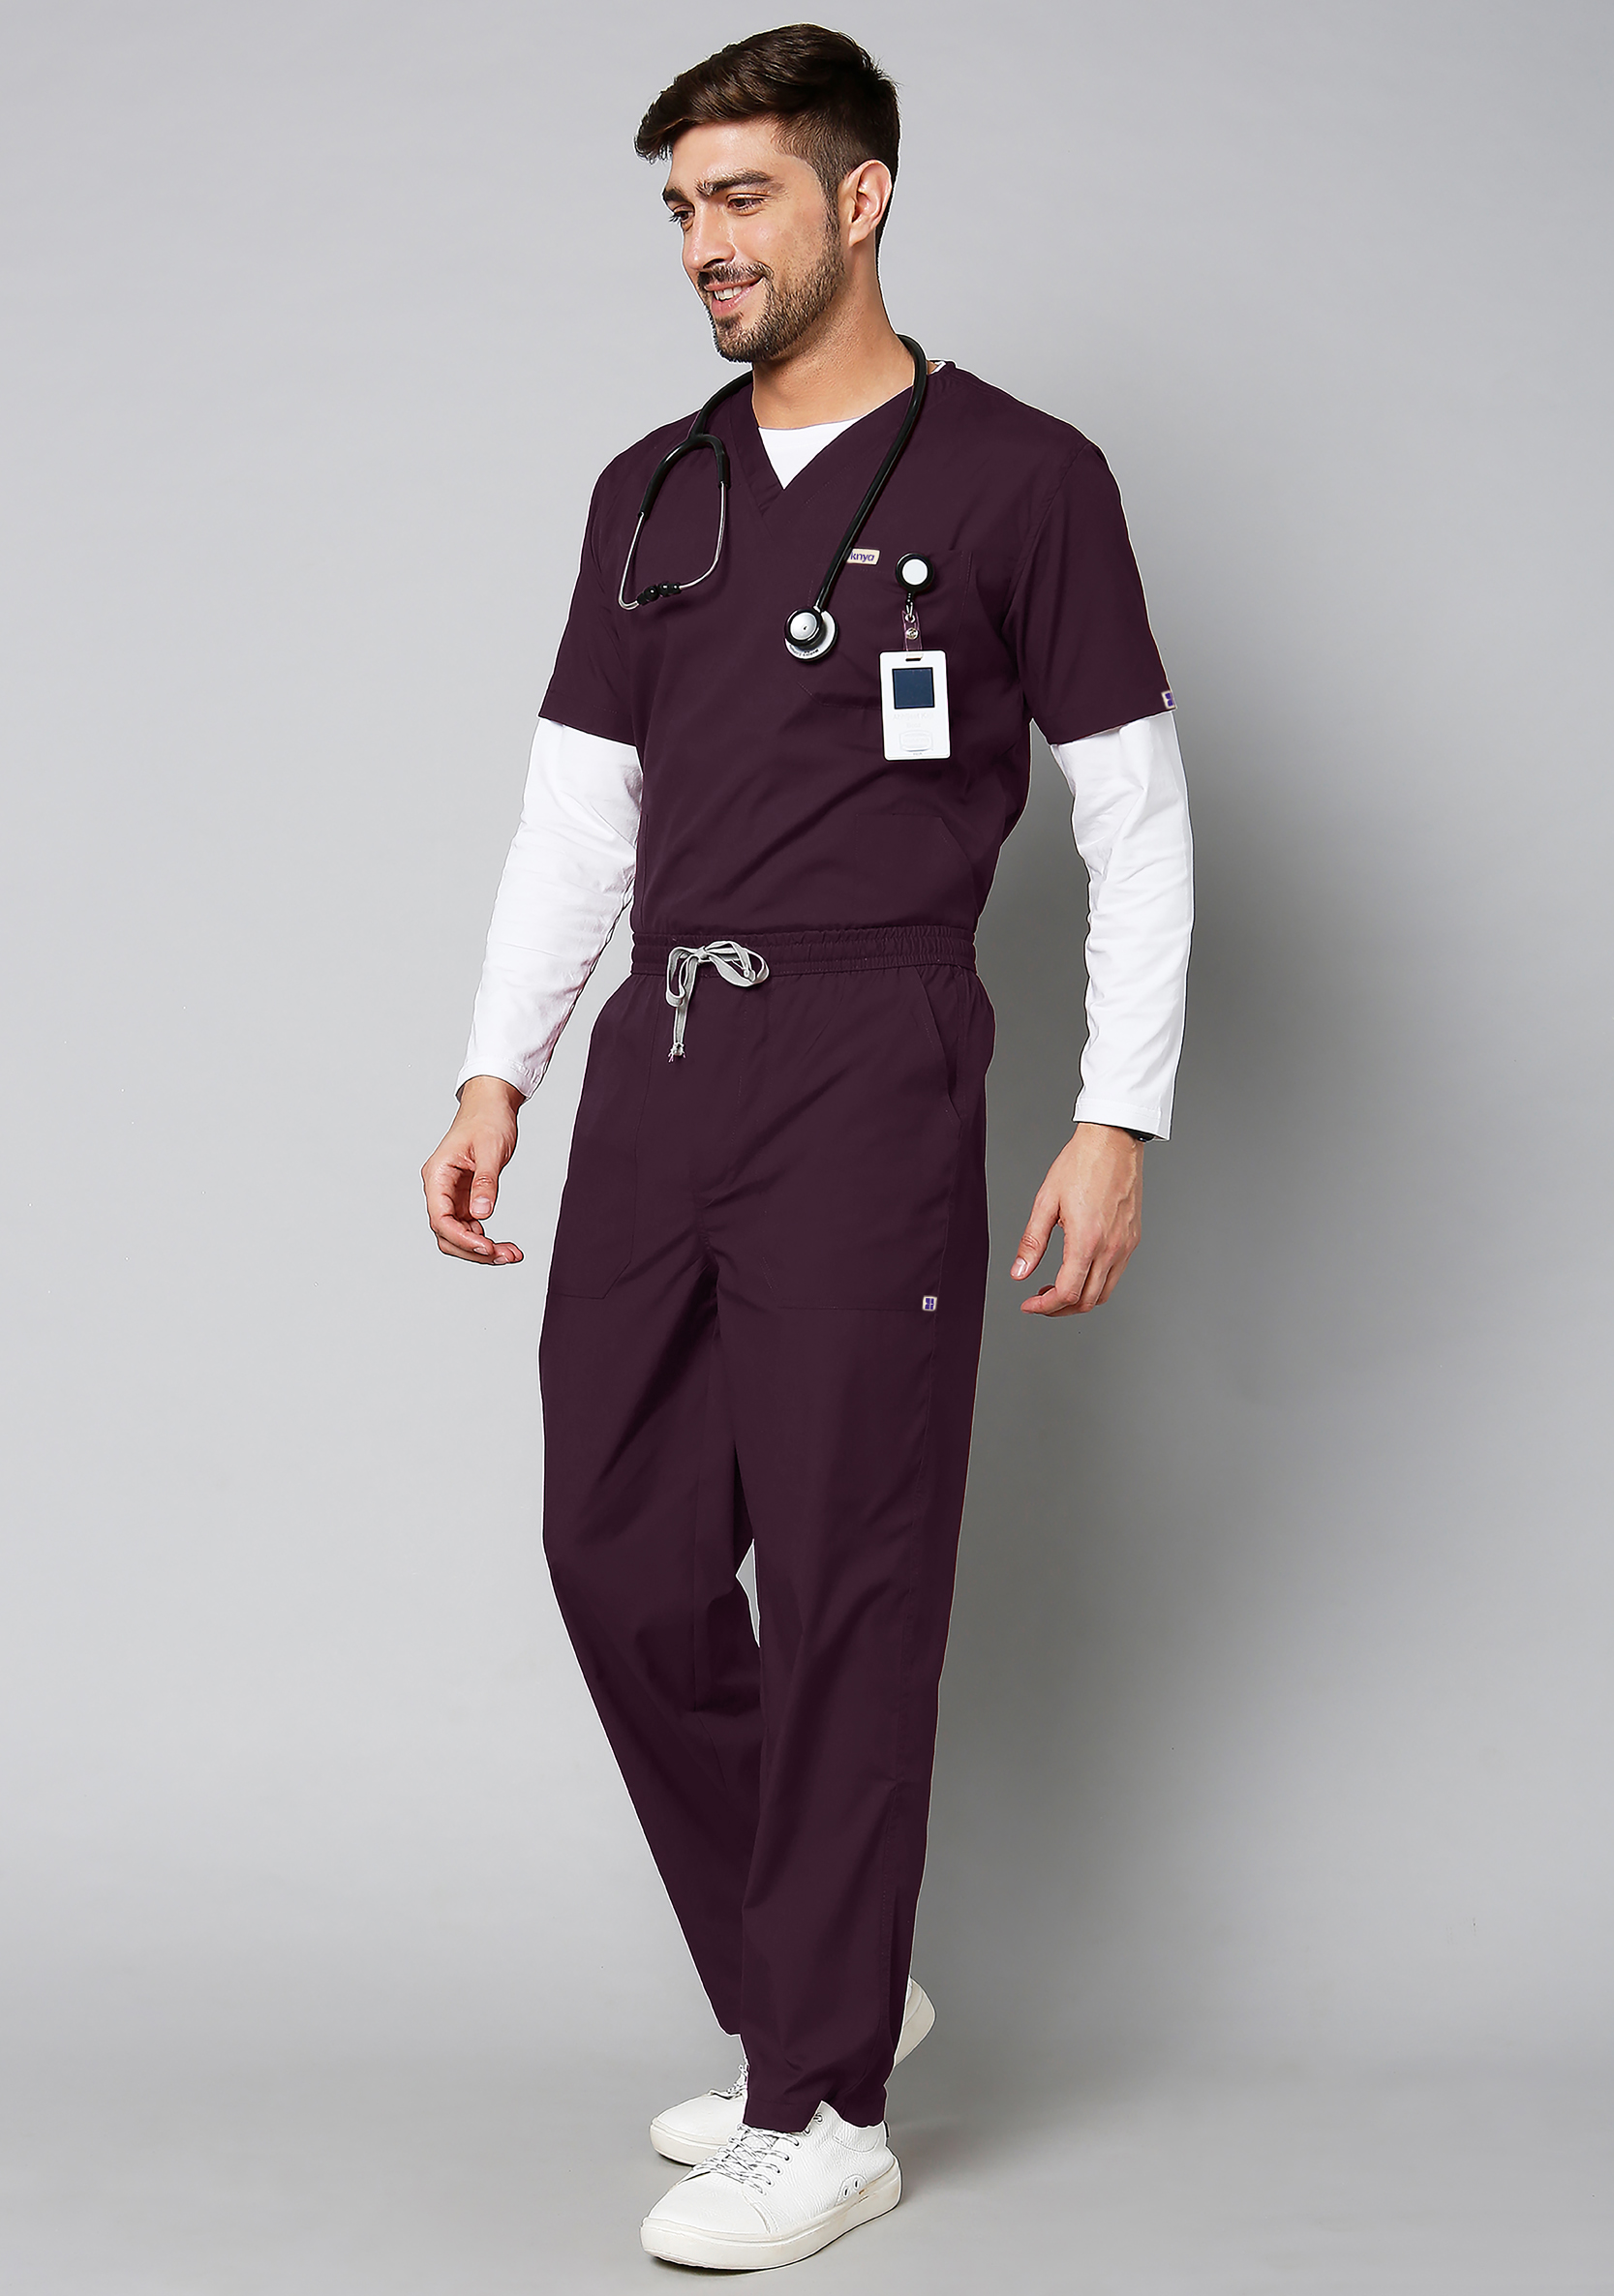 OT KURTA PAJAMA (SURGEON DRESS) SCRUB SUIT FOR HOSPITAL STAFF (MAROON, 34)  : Amazon.in: Fashion